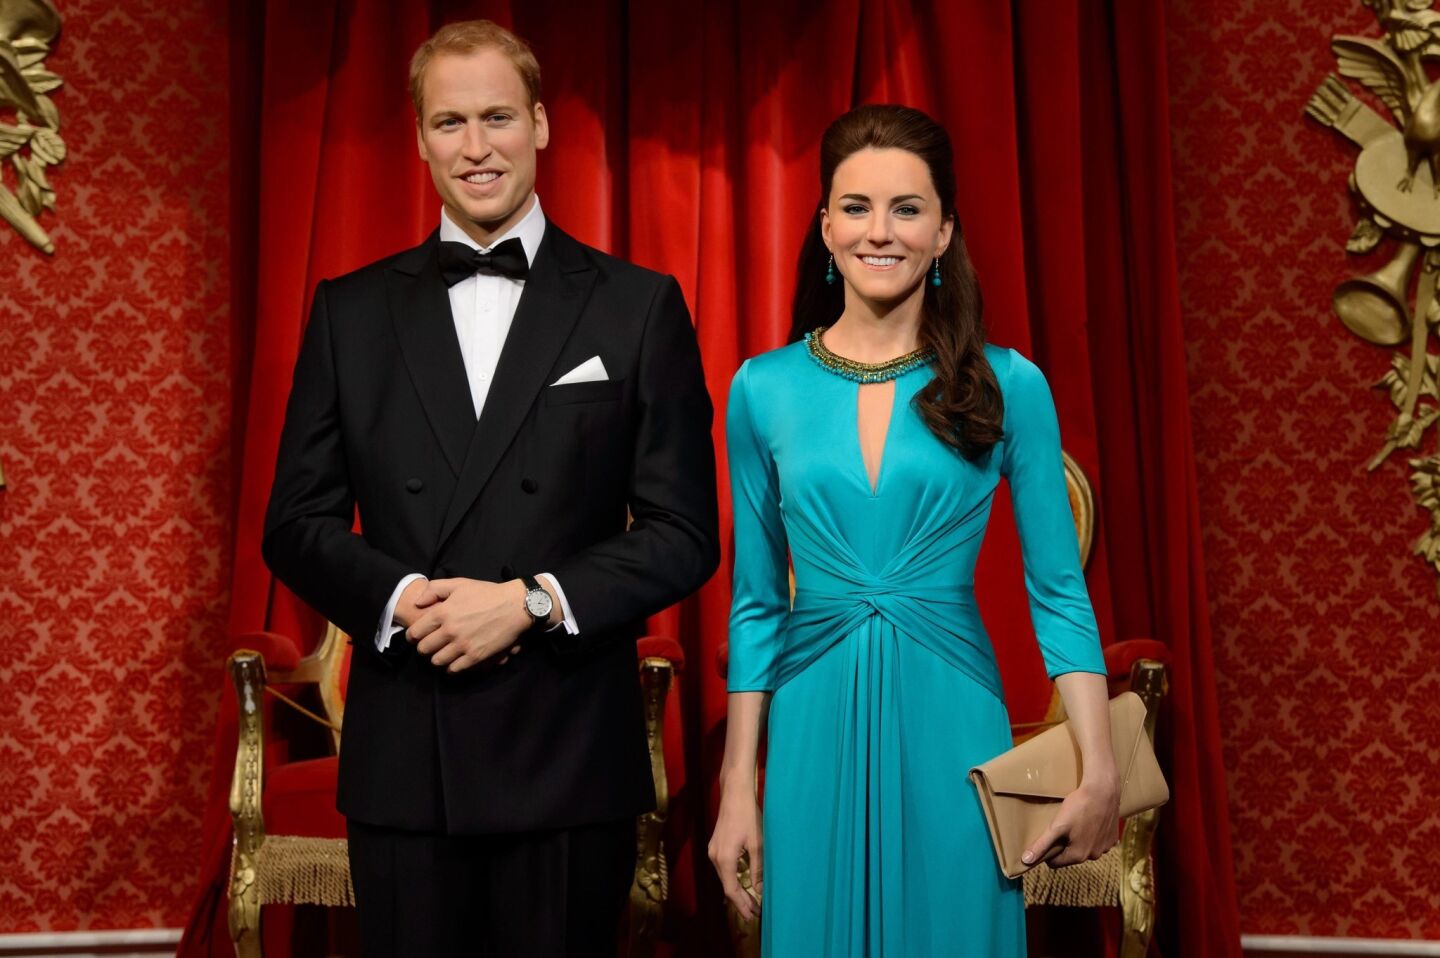 Duke and Duchess of Cambridge waxworks